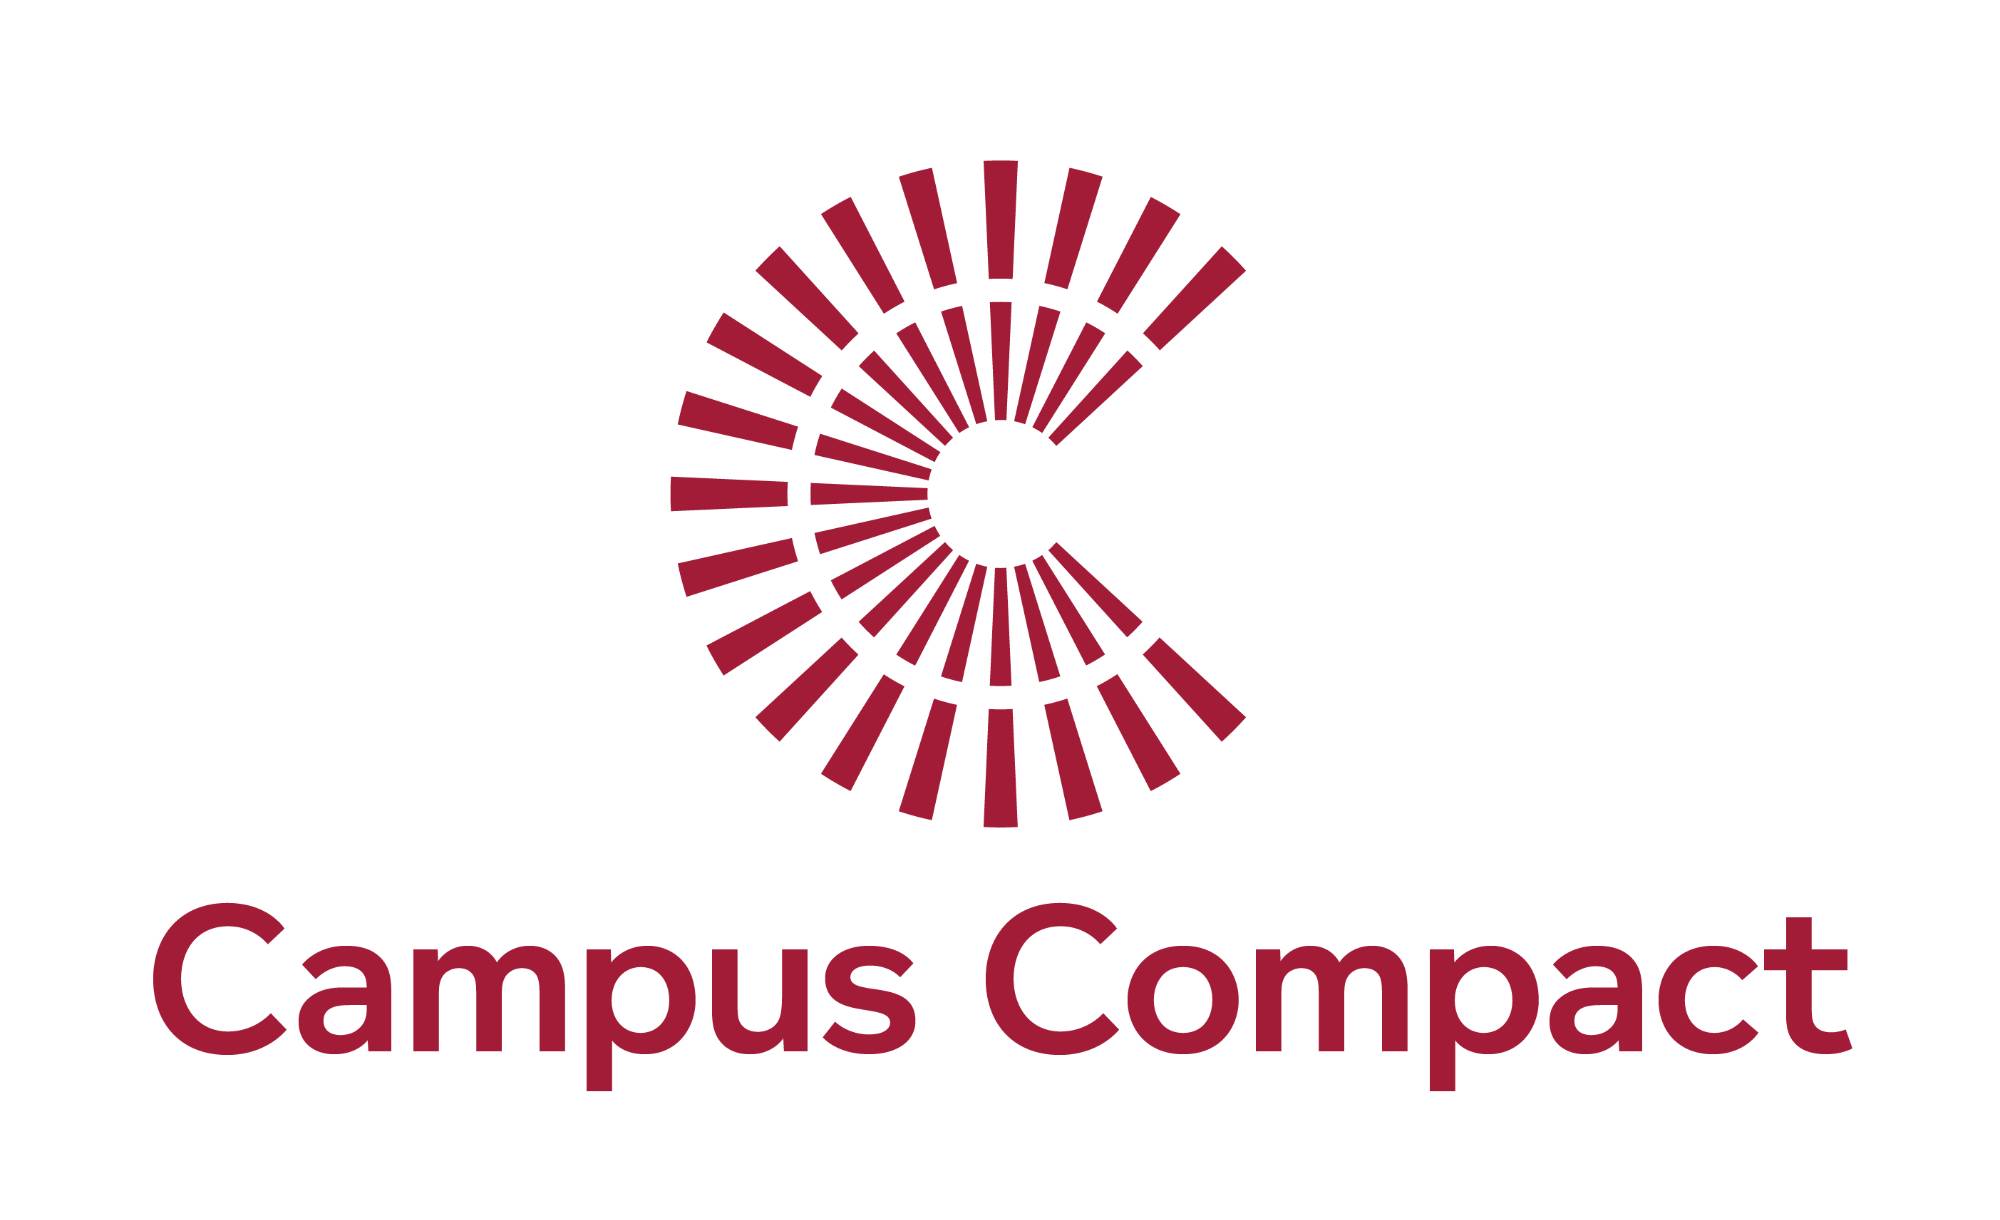 Michigan Campus Compact